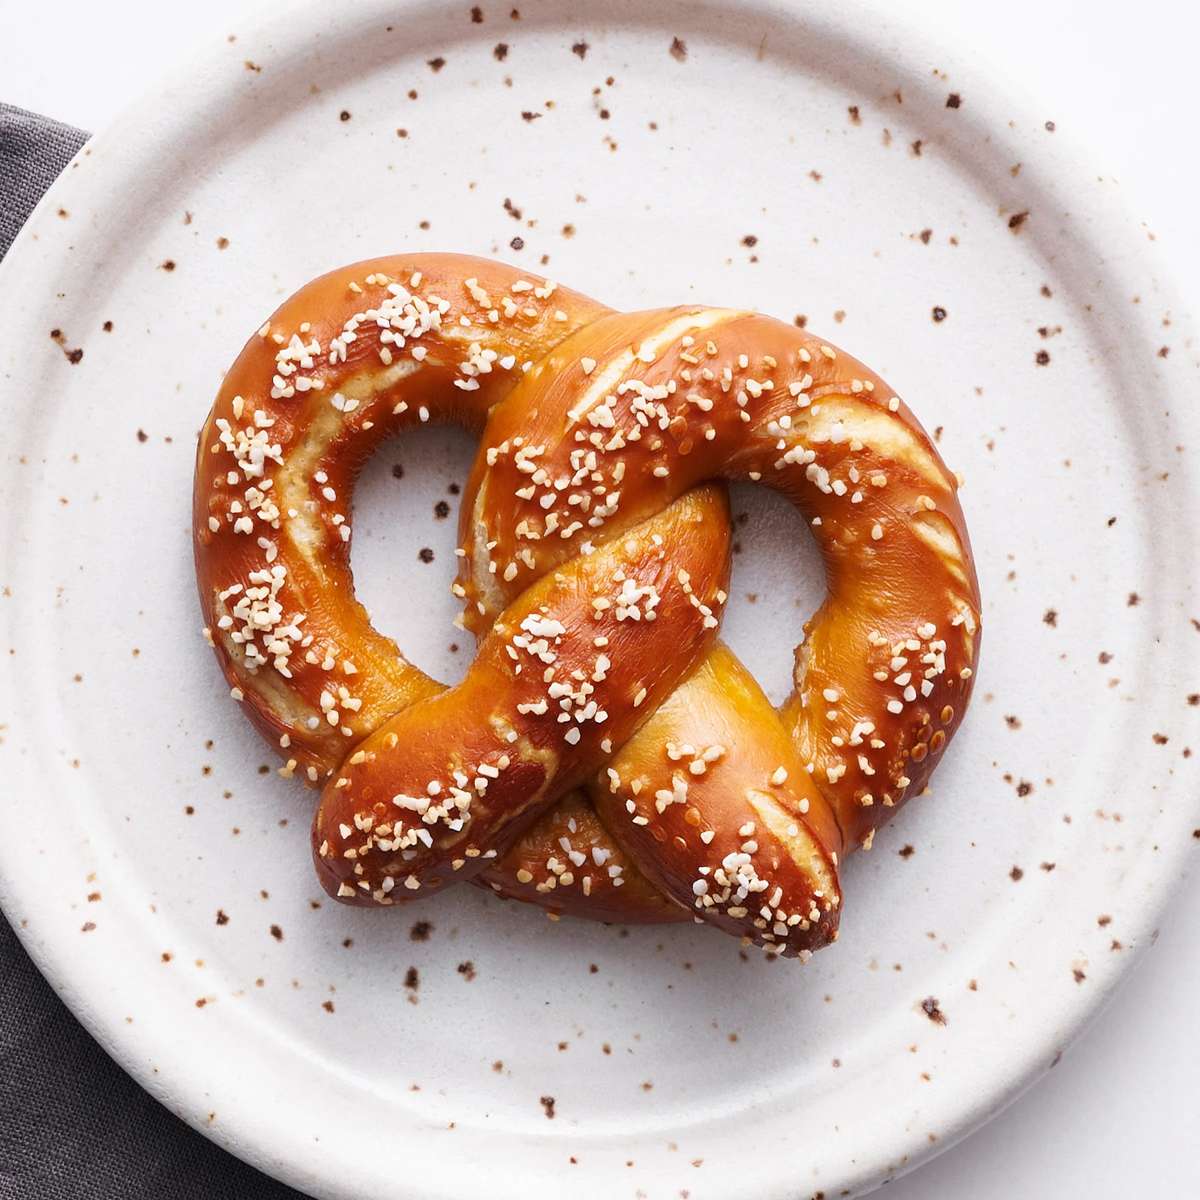 pretzels sim puzzle online a partir de fotografia